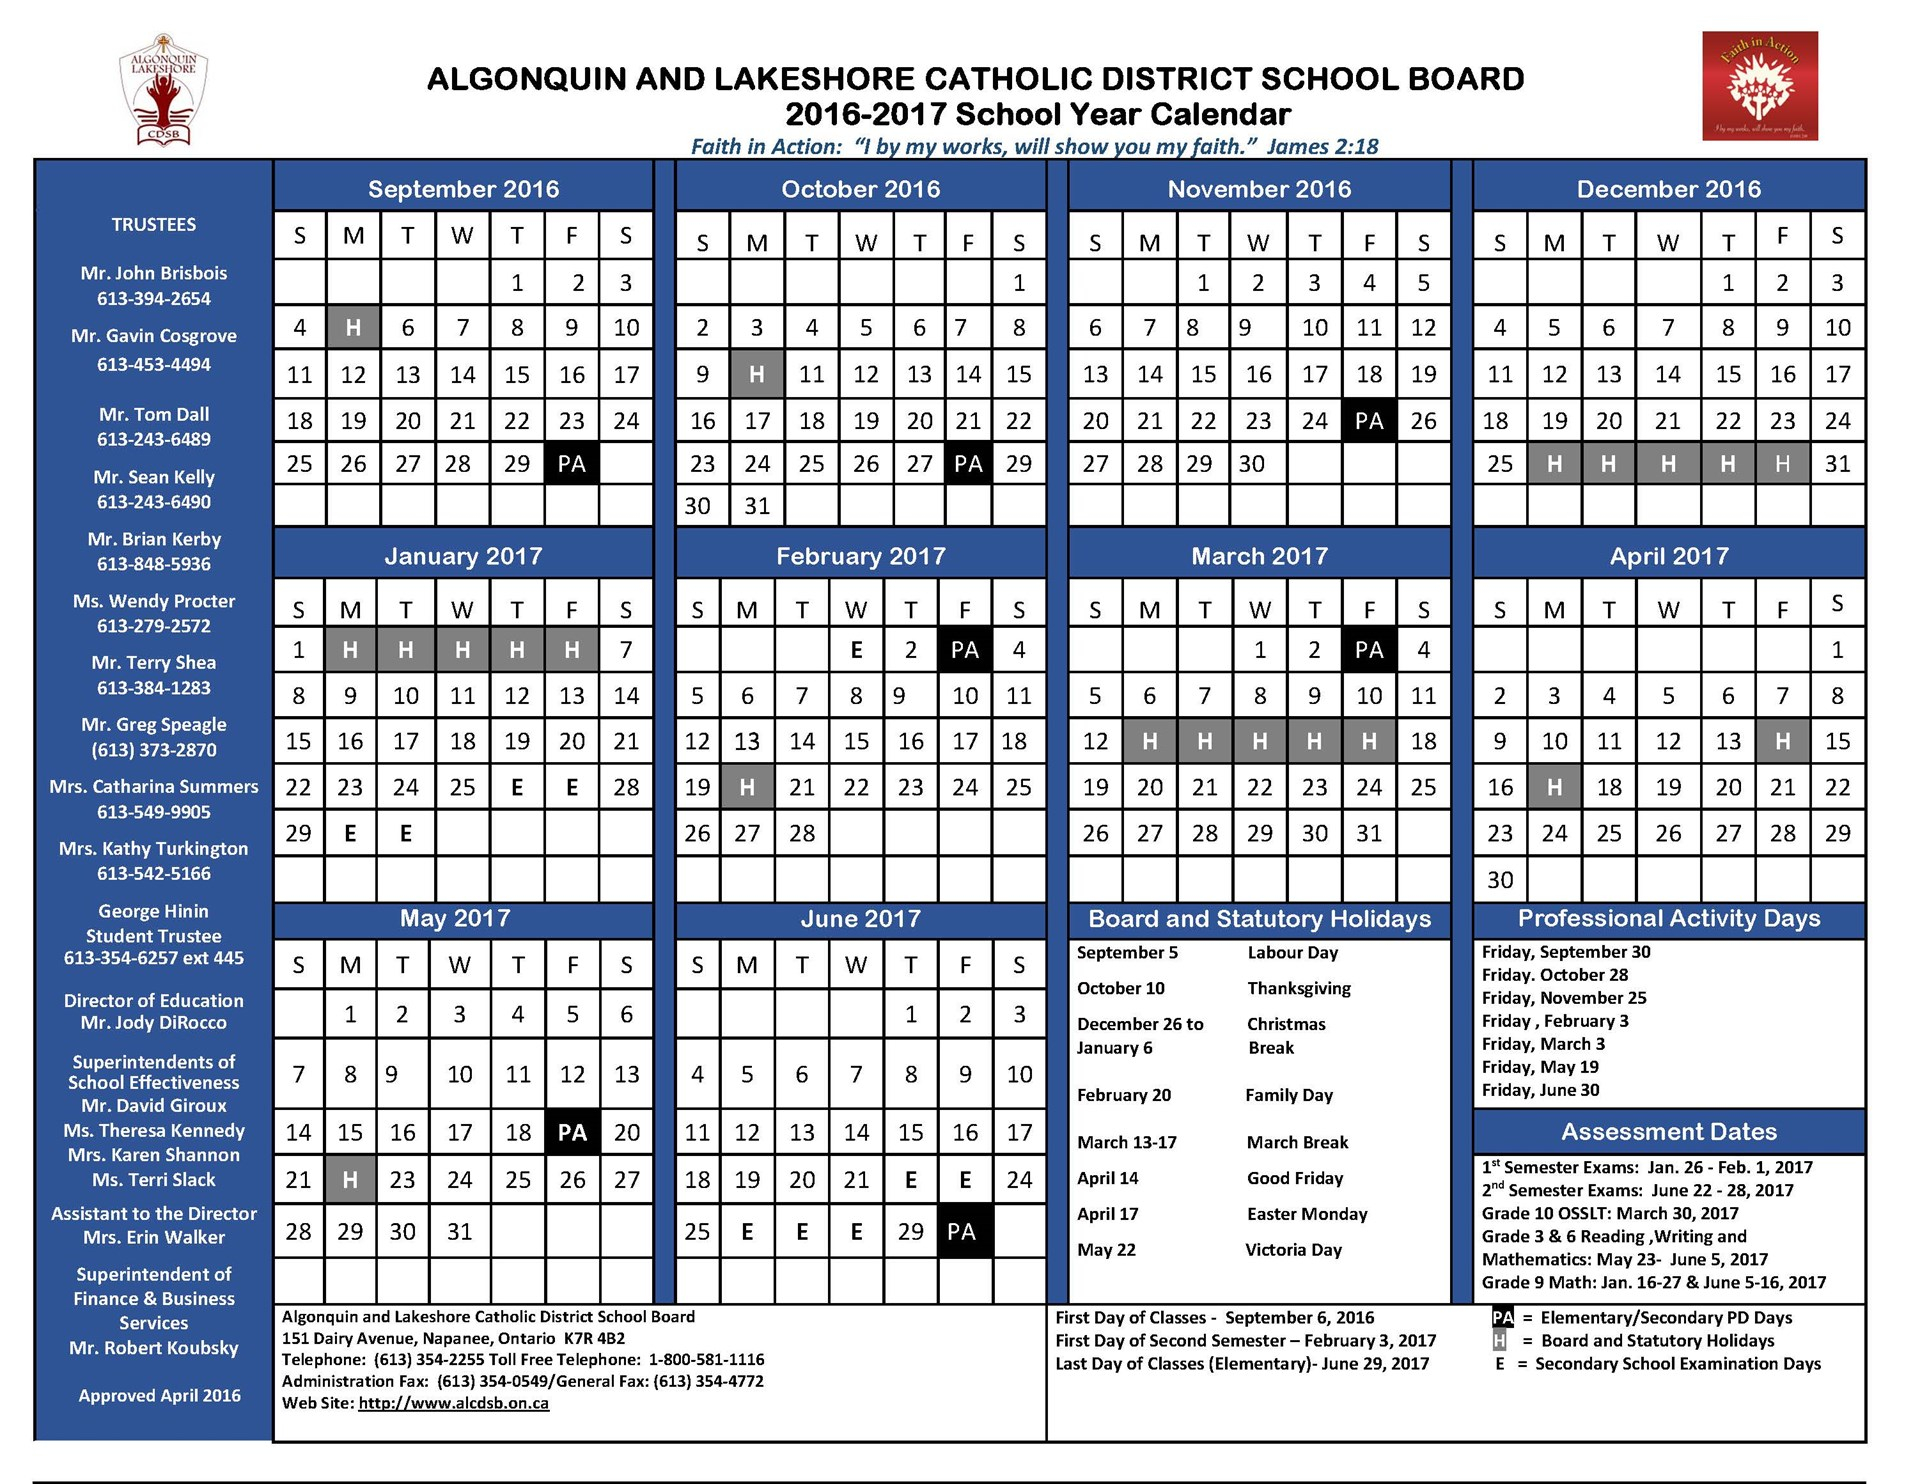 Algonquin Lakeshore Catholic District School Board Calendar 2023 